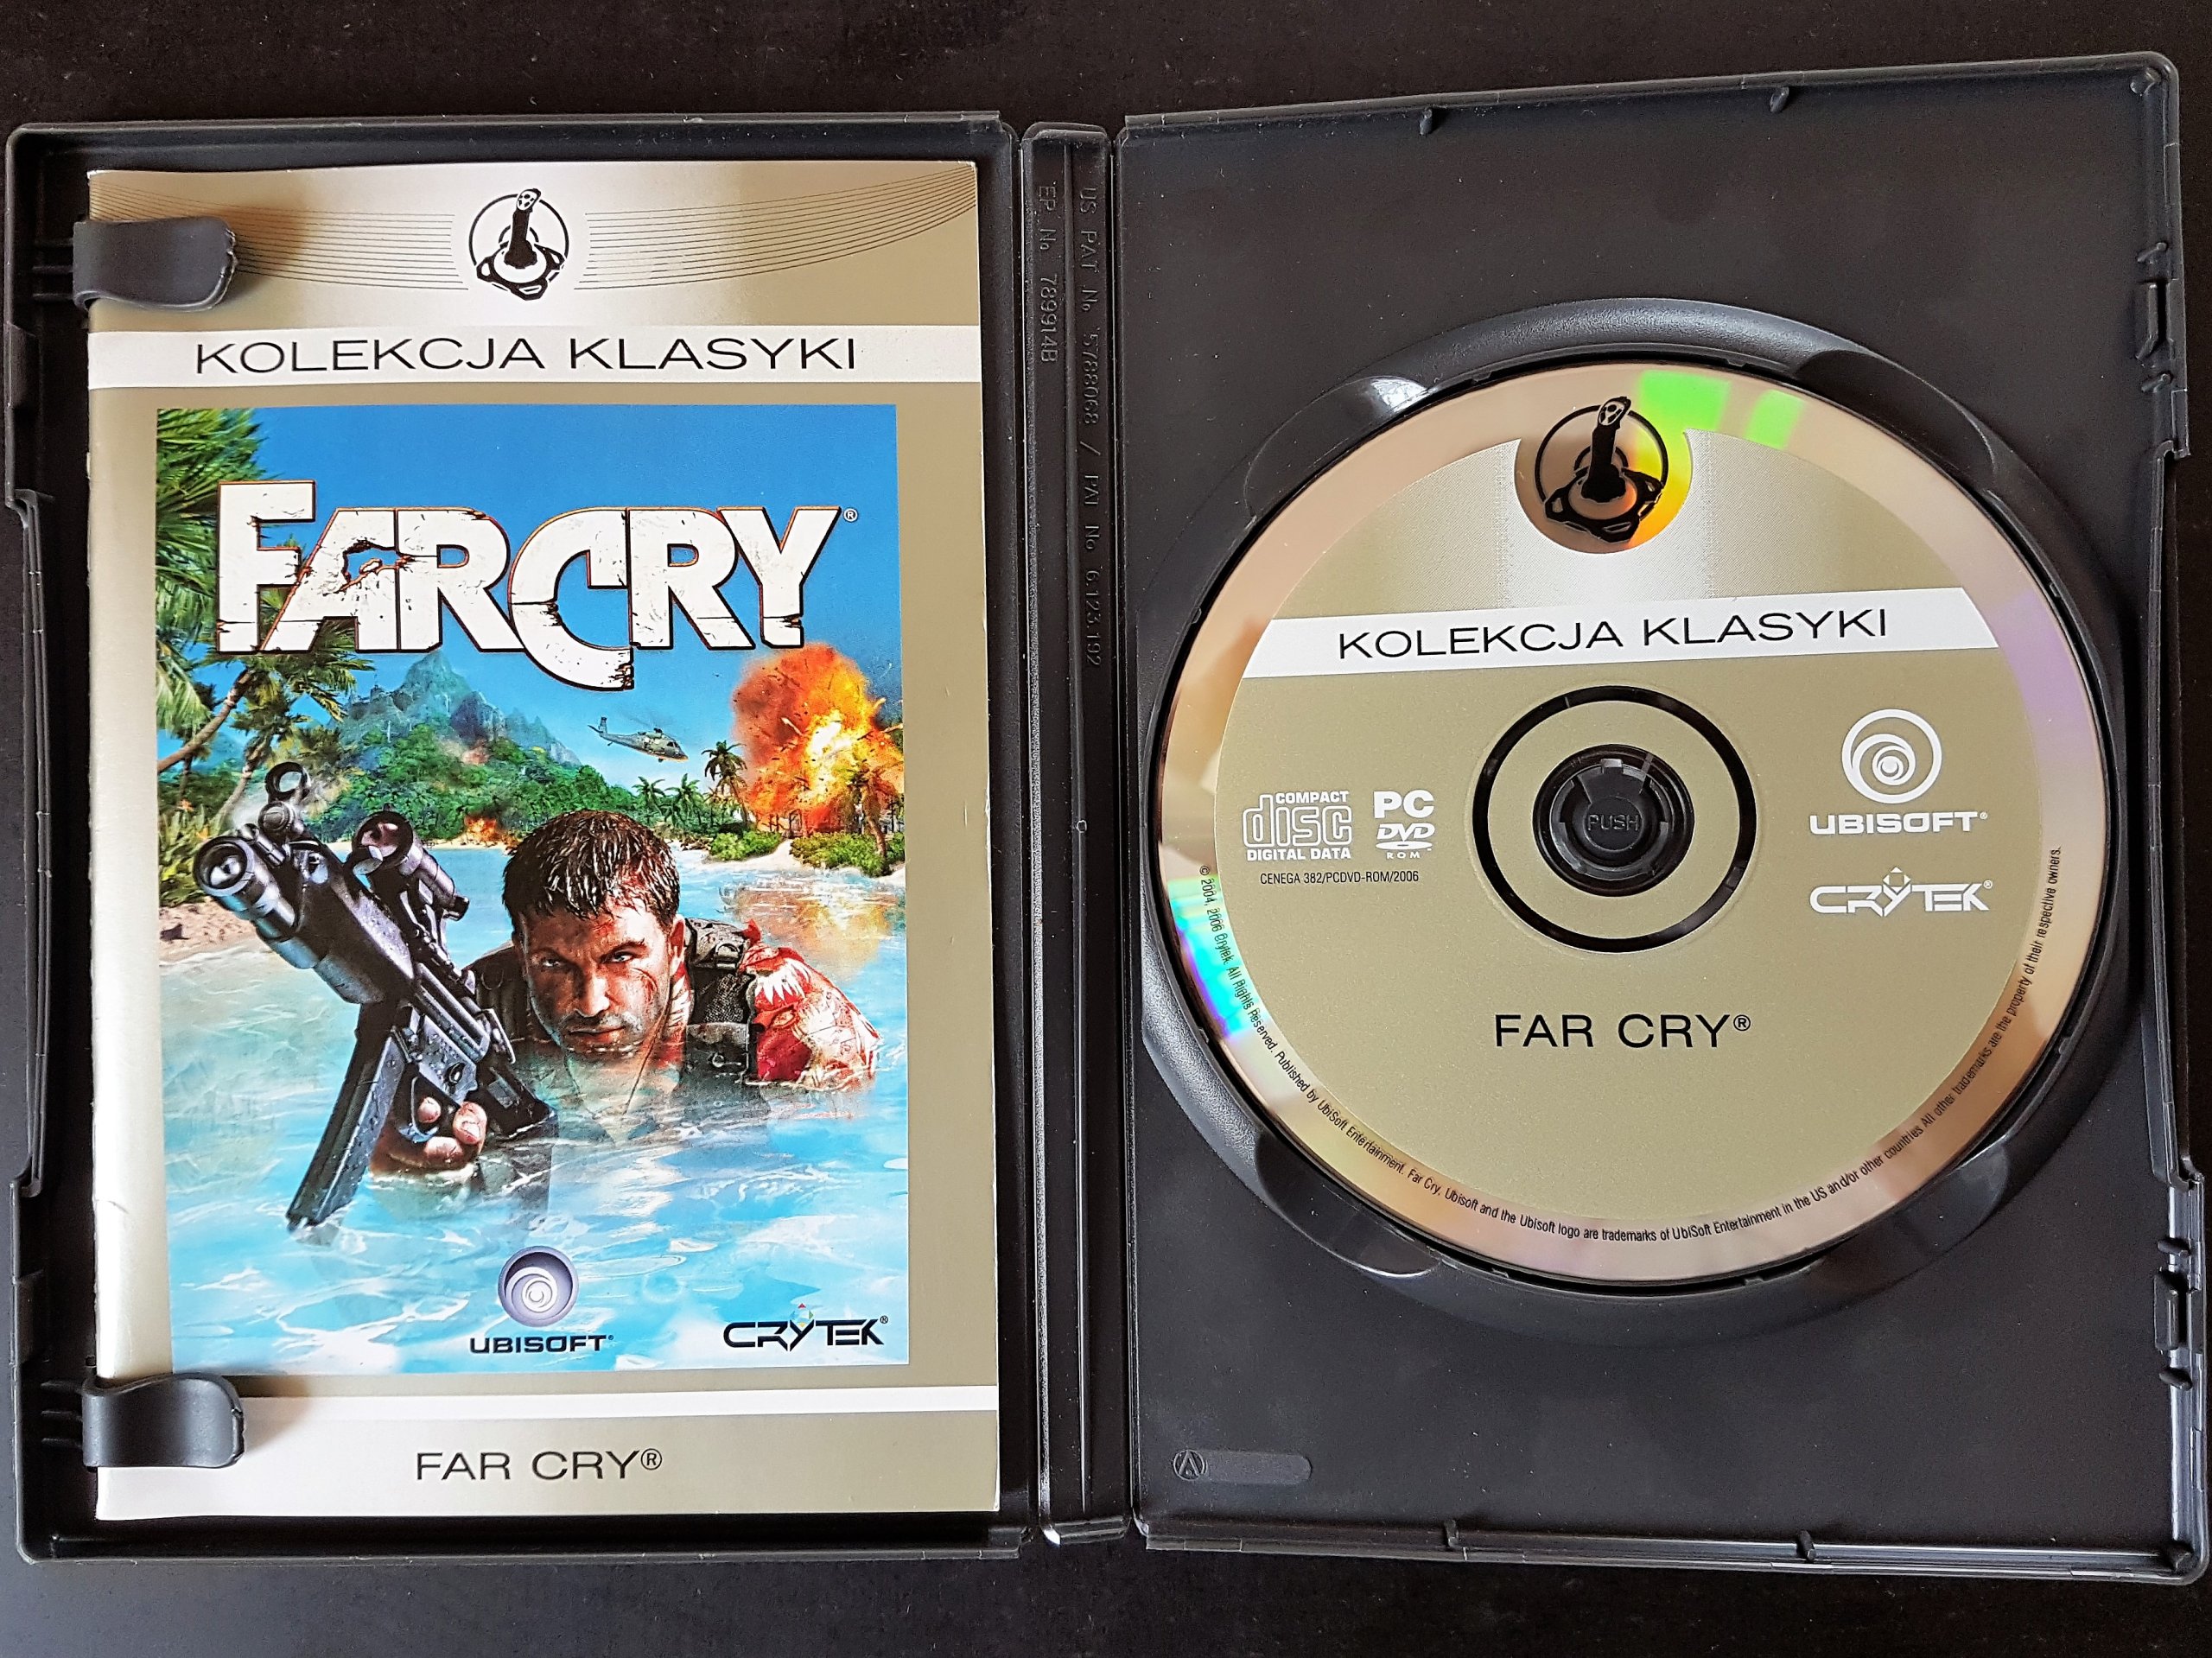 Far Cry 1 gra na PC polska wersja dubbing BCM!